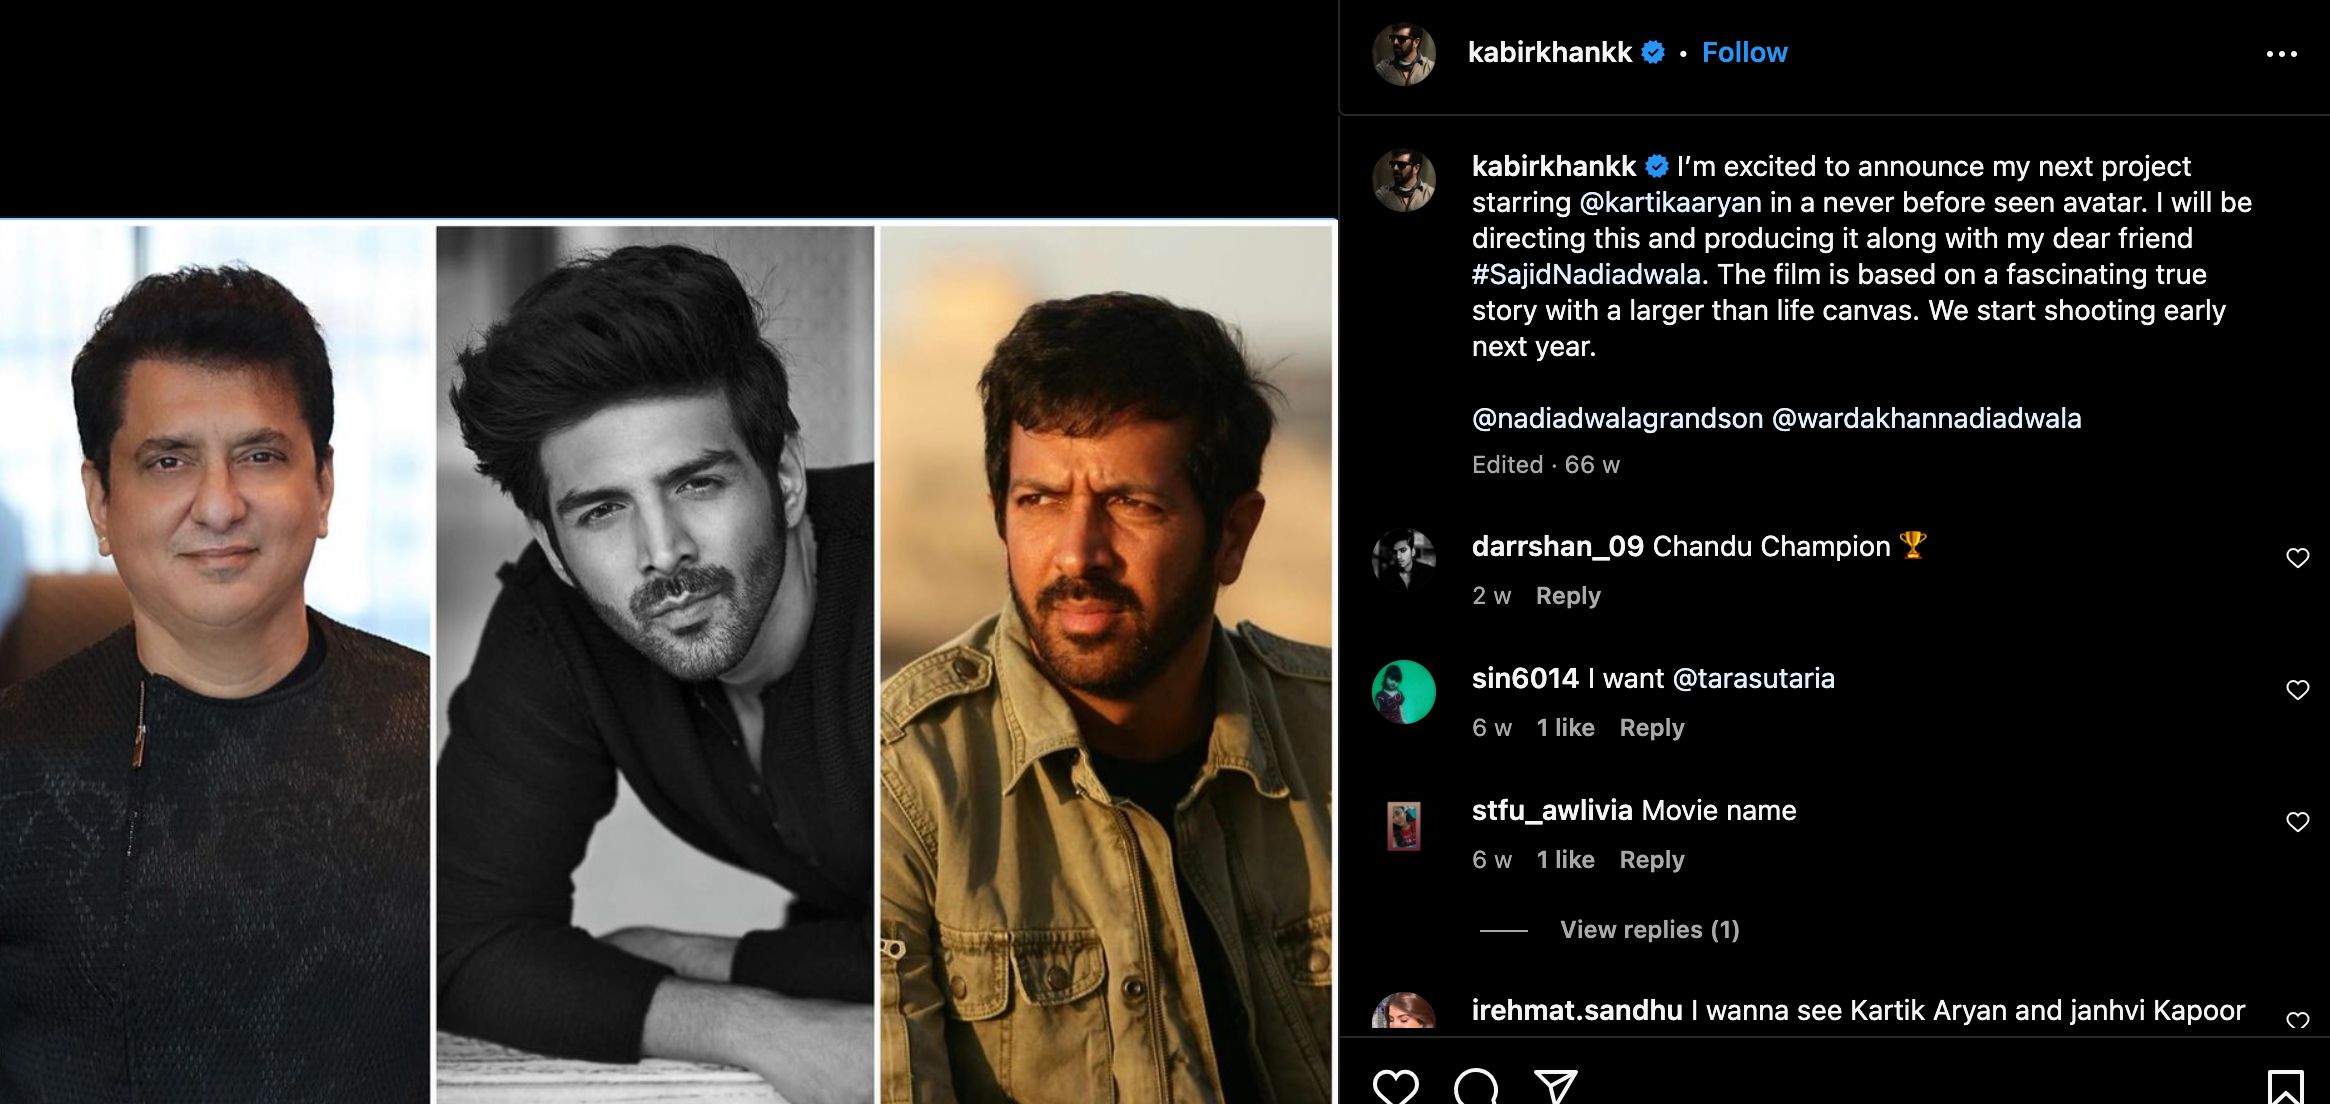 Kabir Khan's new film announcement in his Instagram post